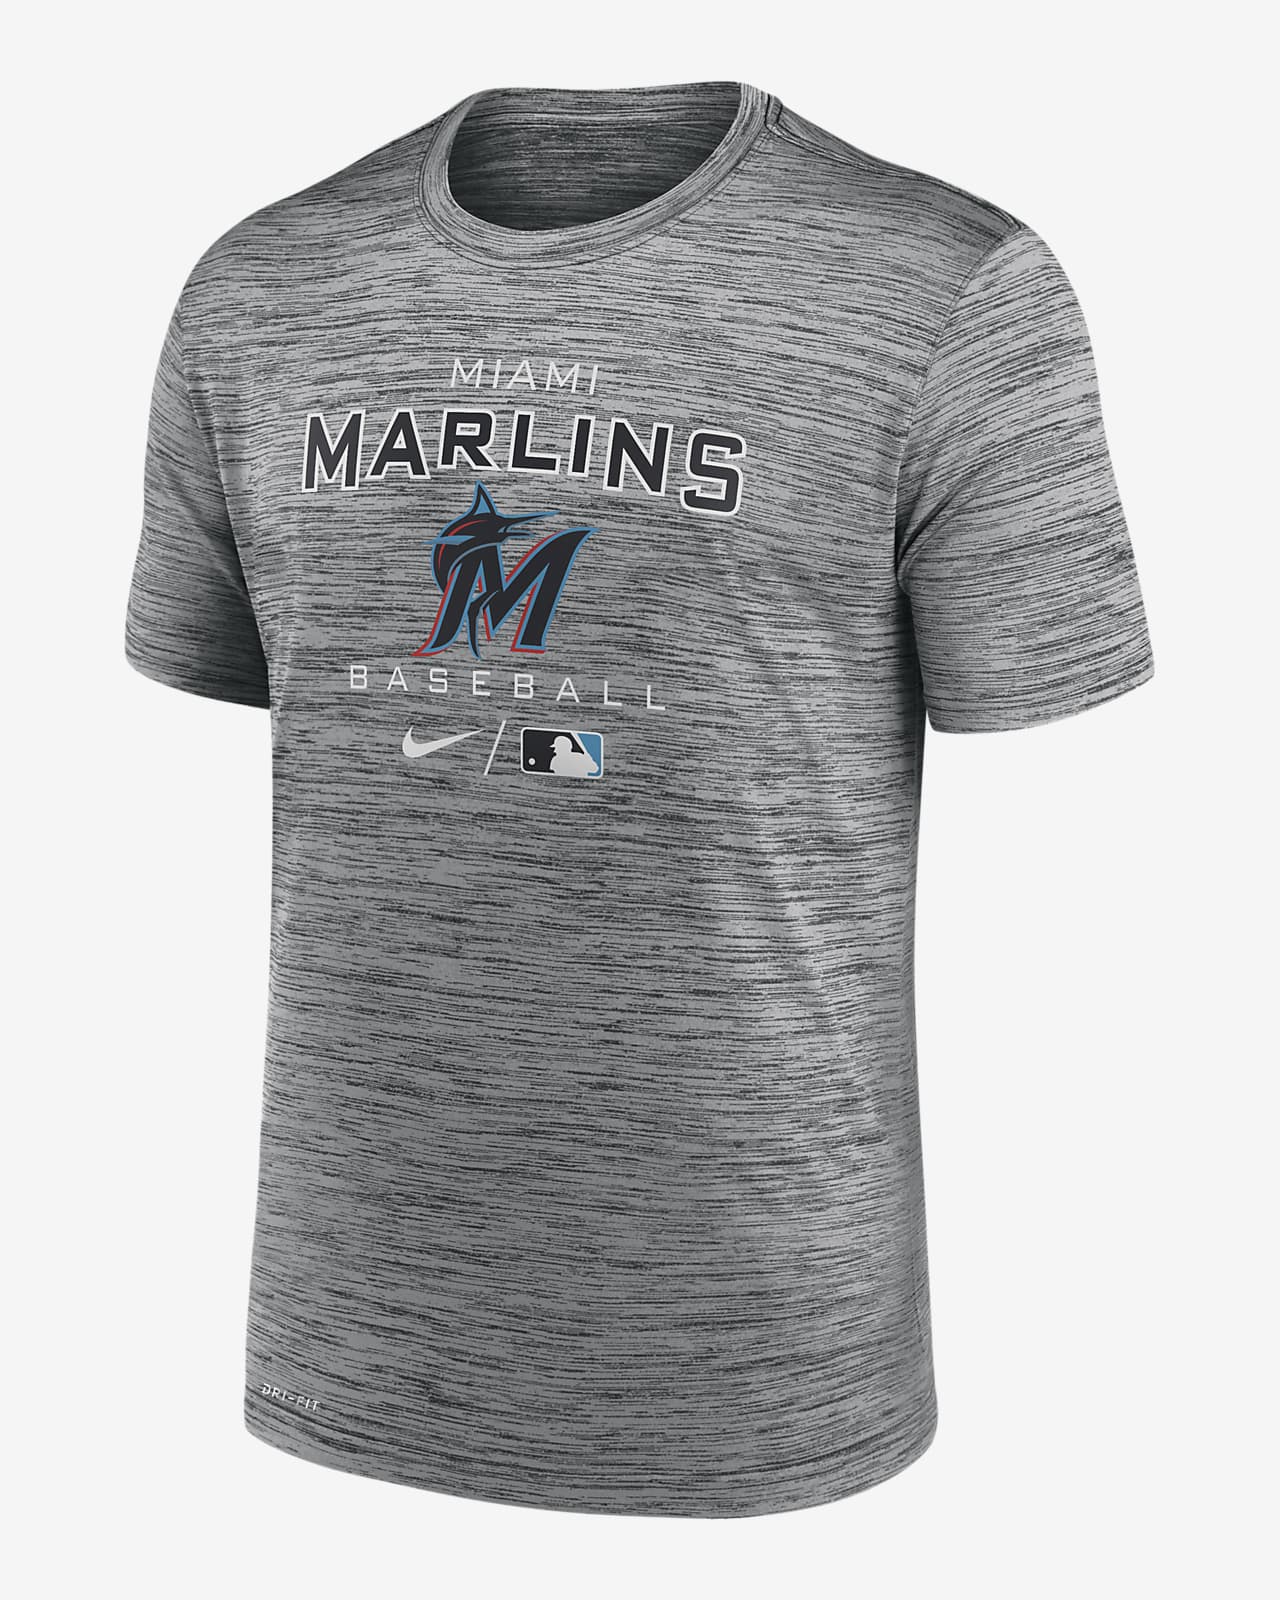 Nike Dri-FIT Velocity Practice (MLB Miami Marlins) Men's T-Shirt. Nike.com